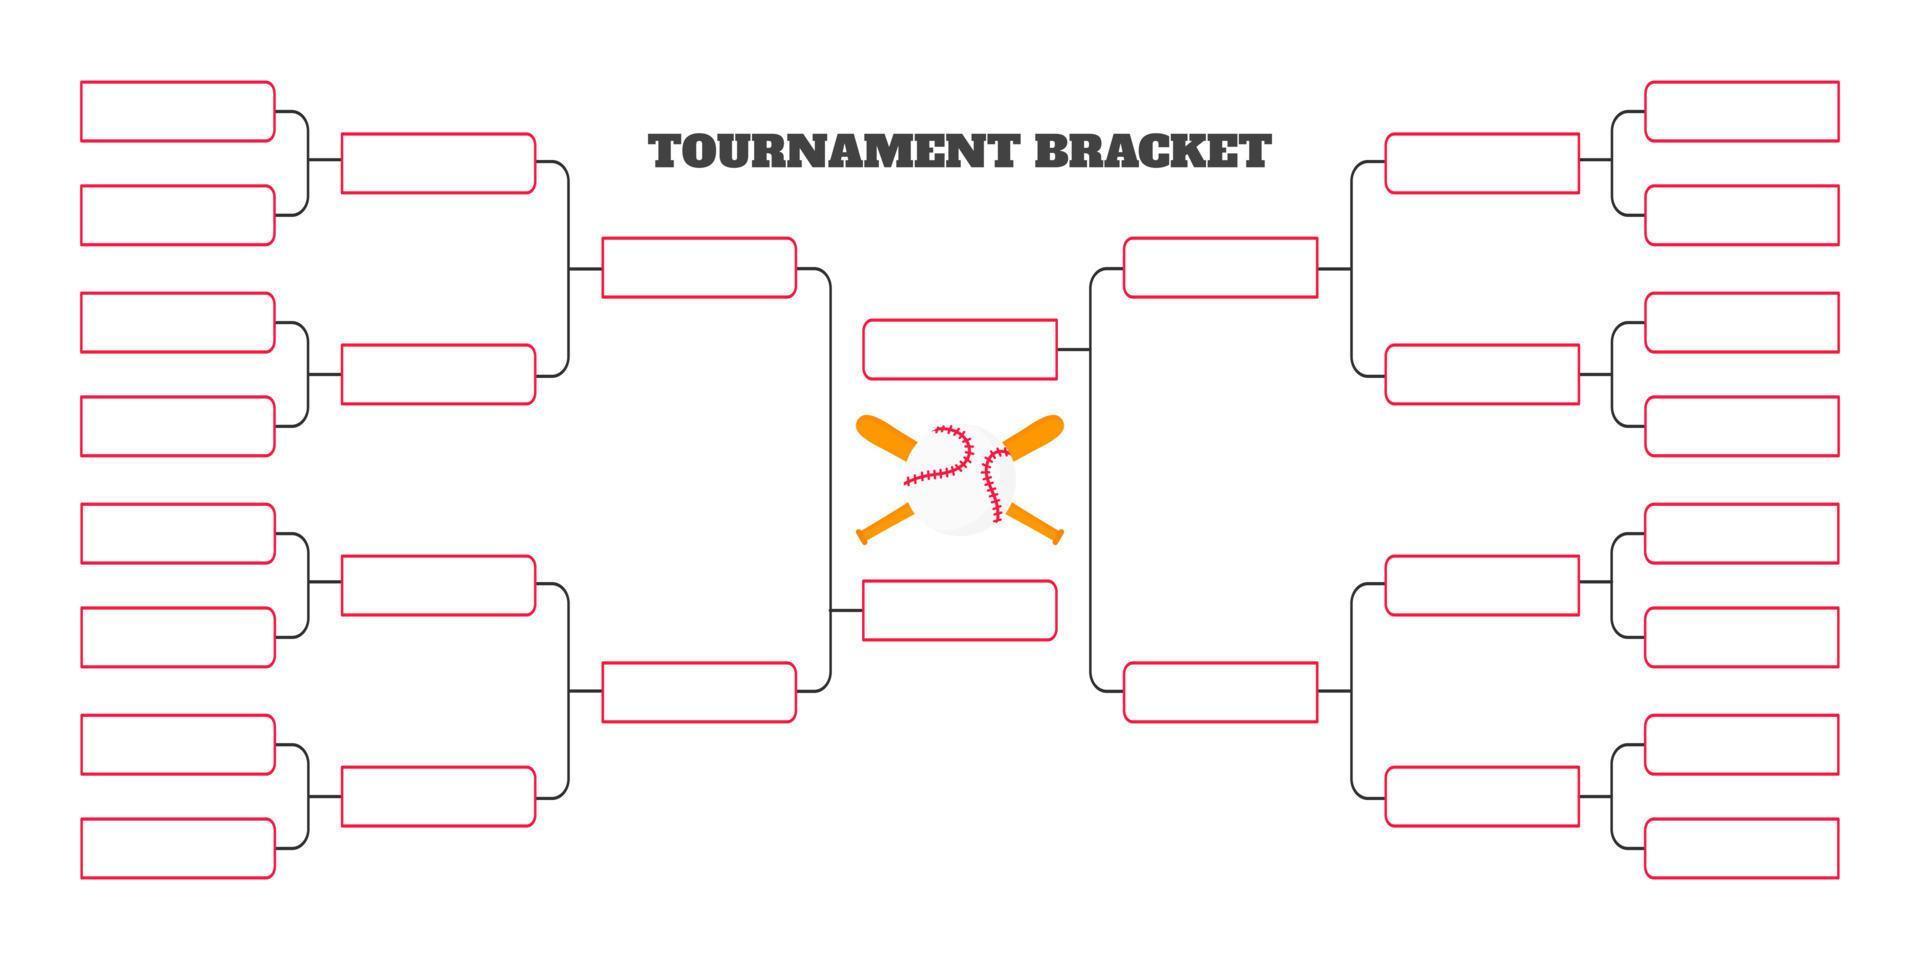 16 team tournament bracket championship template flat style design vector illustration.